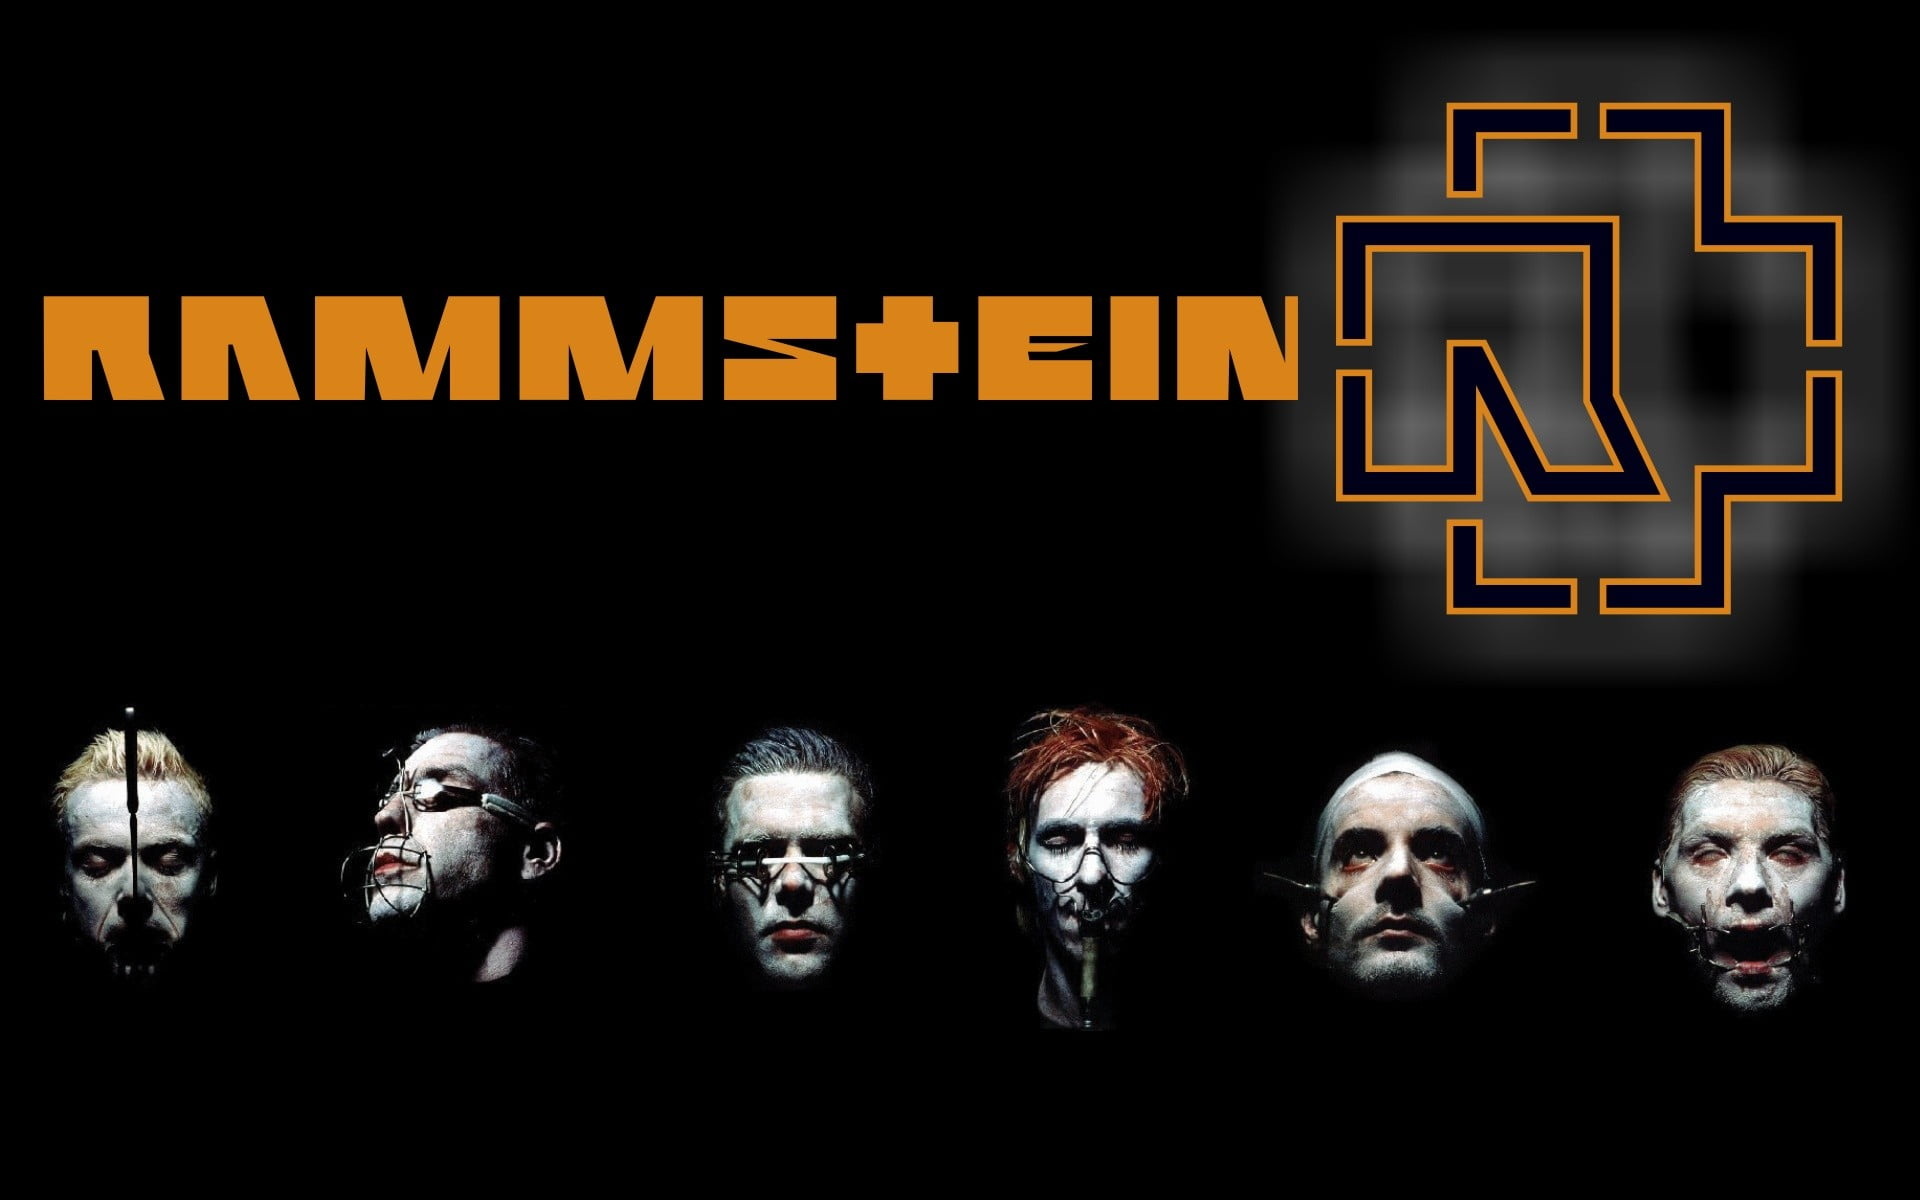 Rammstein: NDH band whose music is best described as dark, heavy rock. 1920x1200 HD Wallpaper.